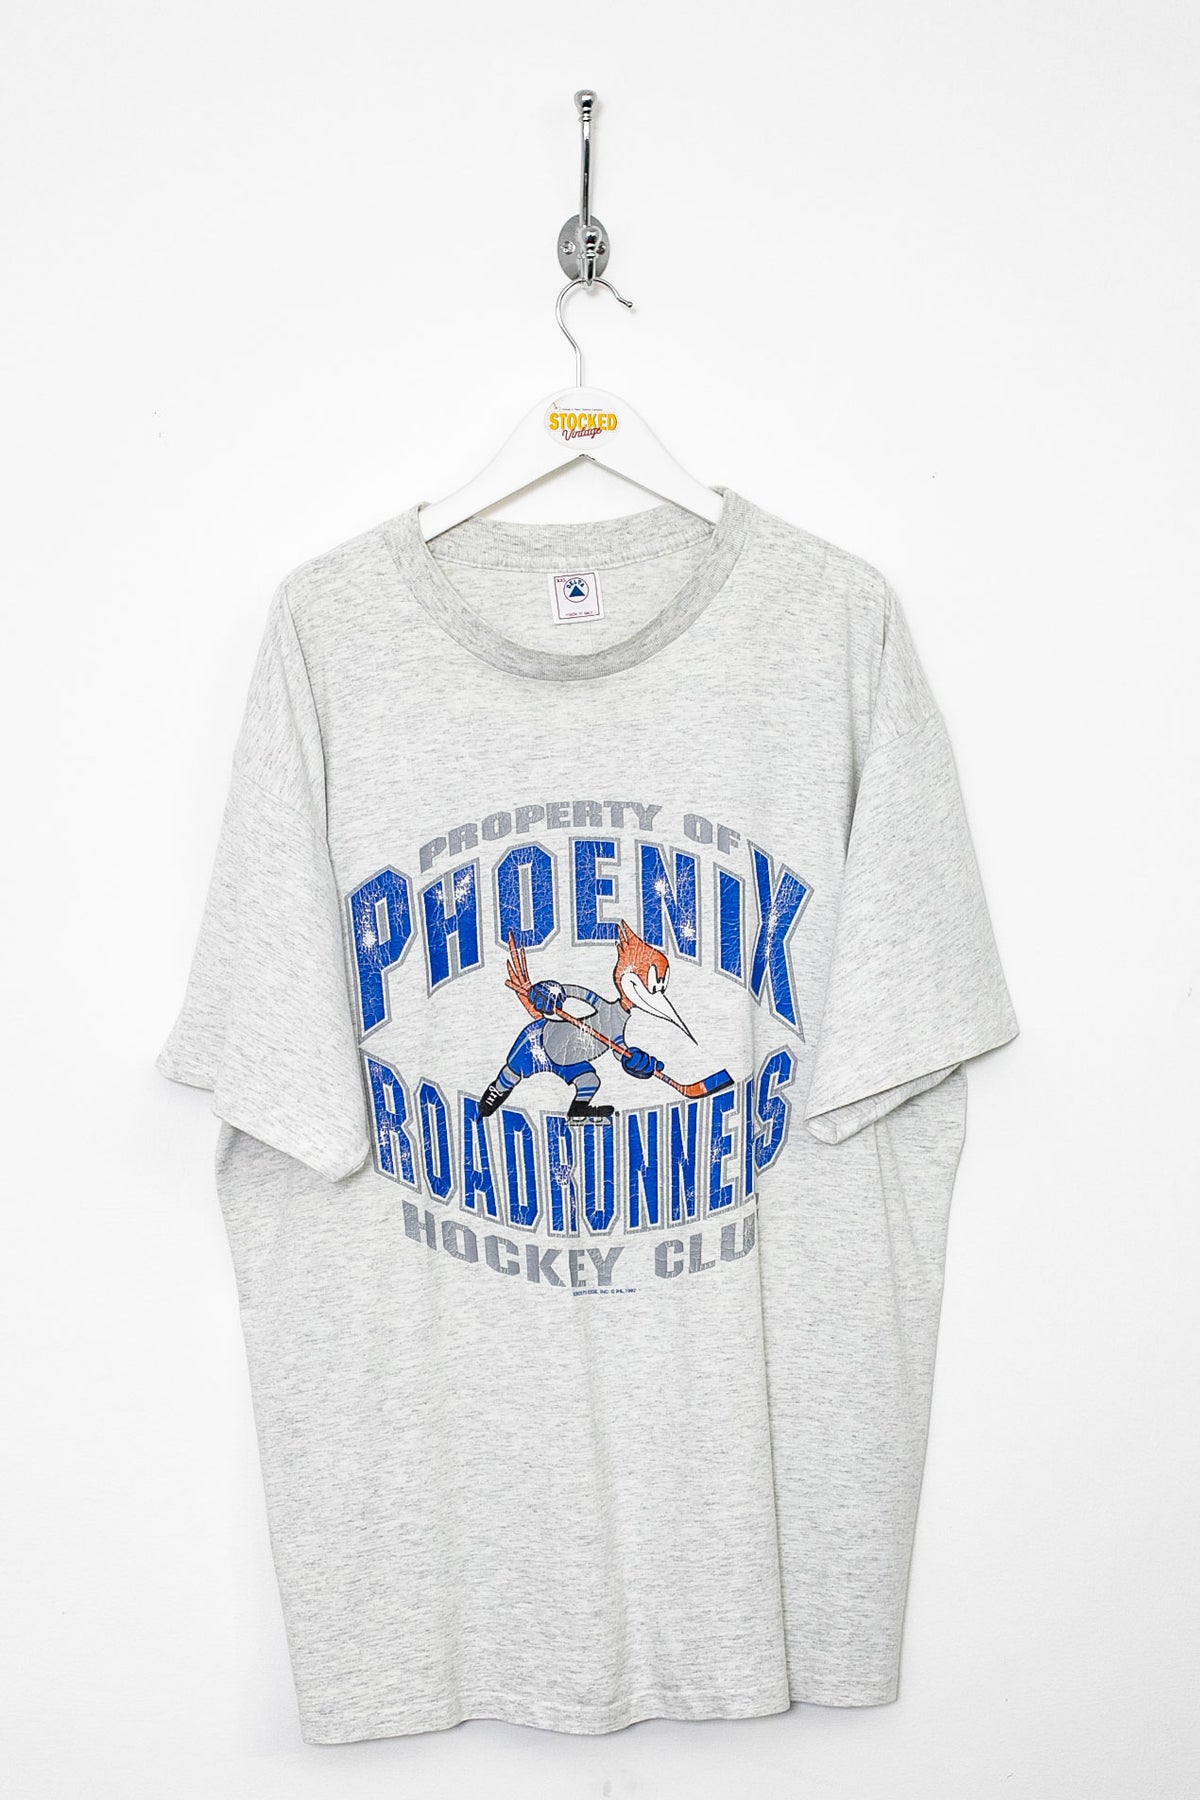 1992 NHL Phoenix Roadrunners Graphic Tee (XL)